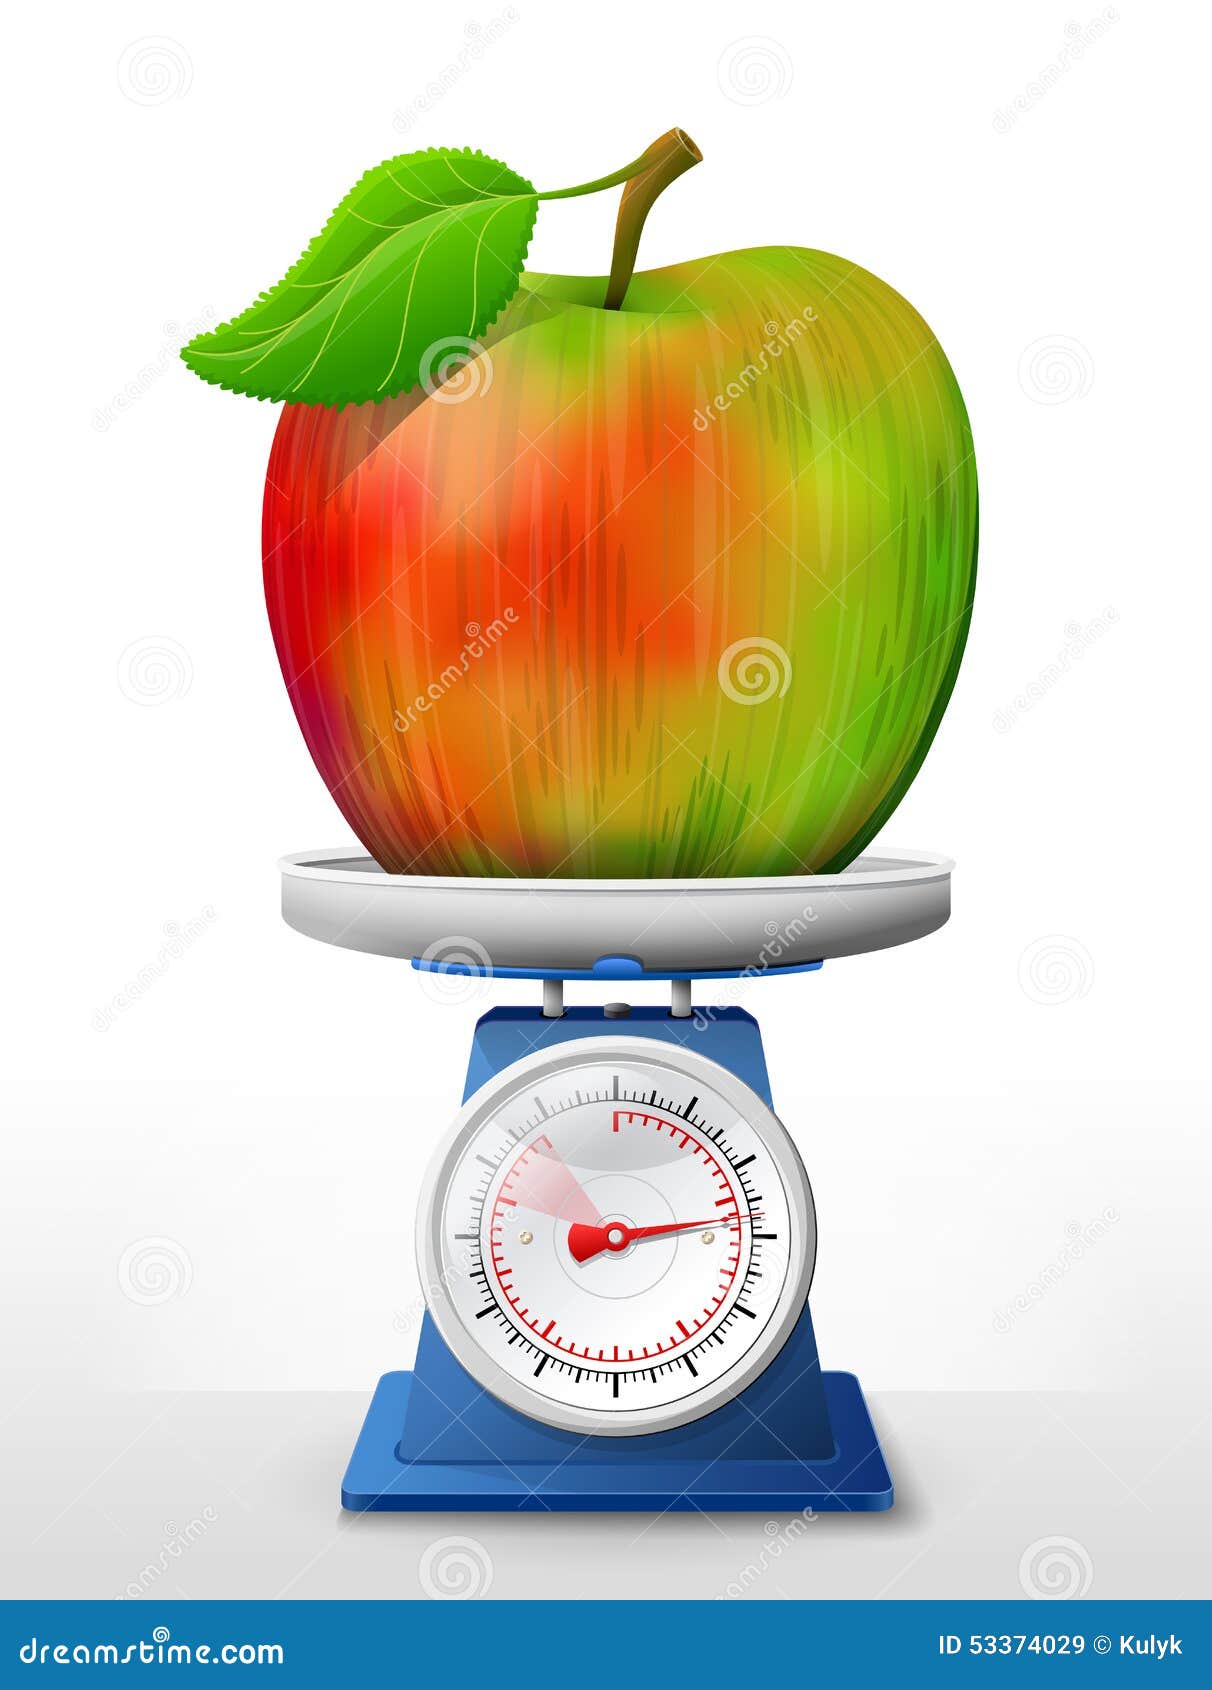 apple fruit on scale pan